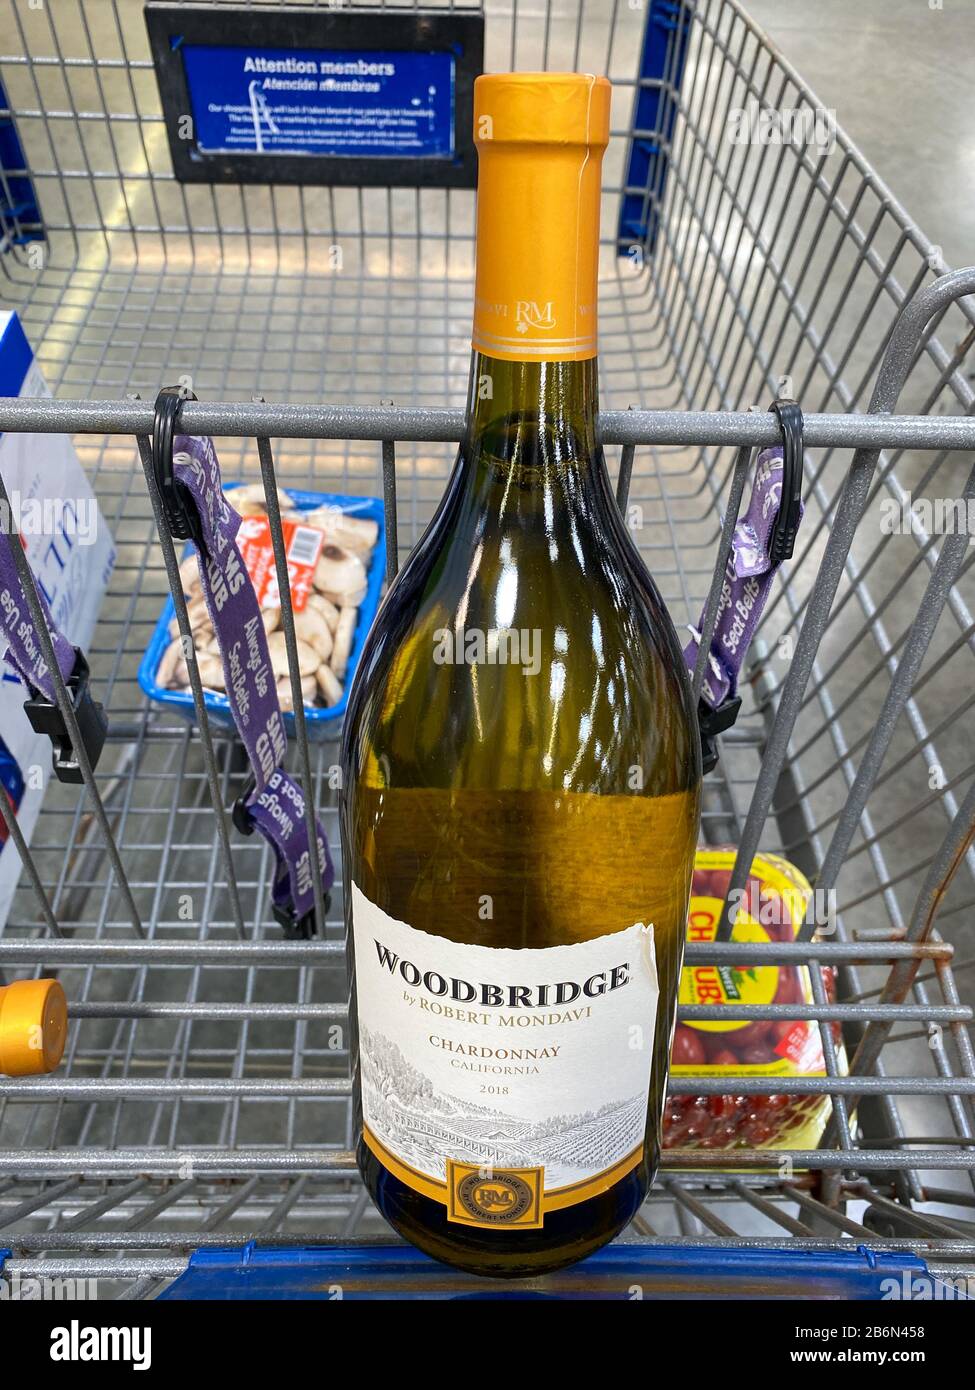 Orlando,FL/USA-3/2/20: A cart with a bottle of Woodbridge Robert Mondavi Chardonnay wine at a Sams Club in Orlando, Florida. Stock Photo